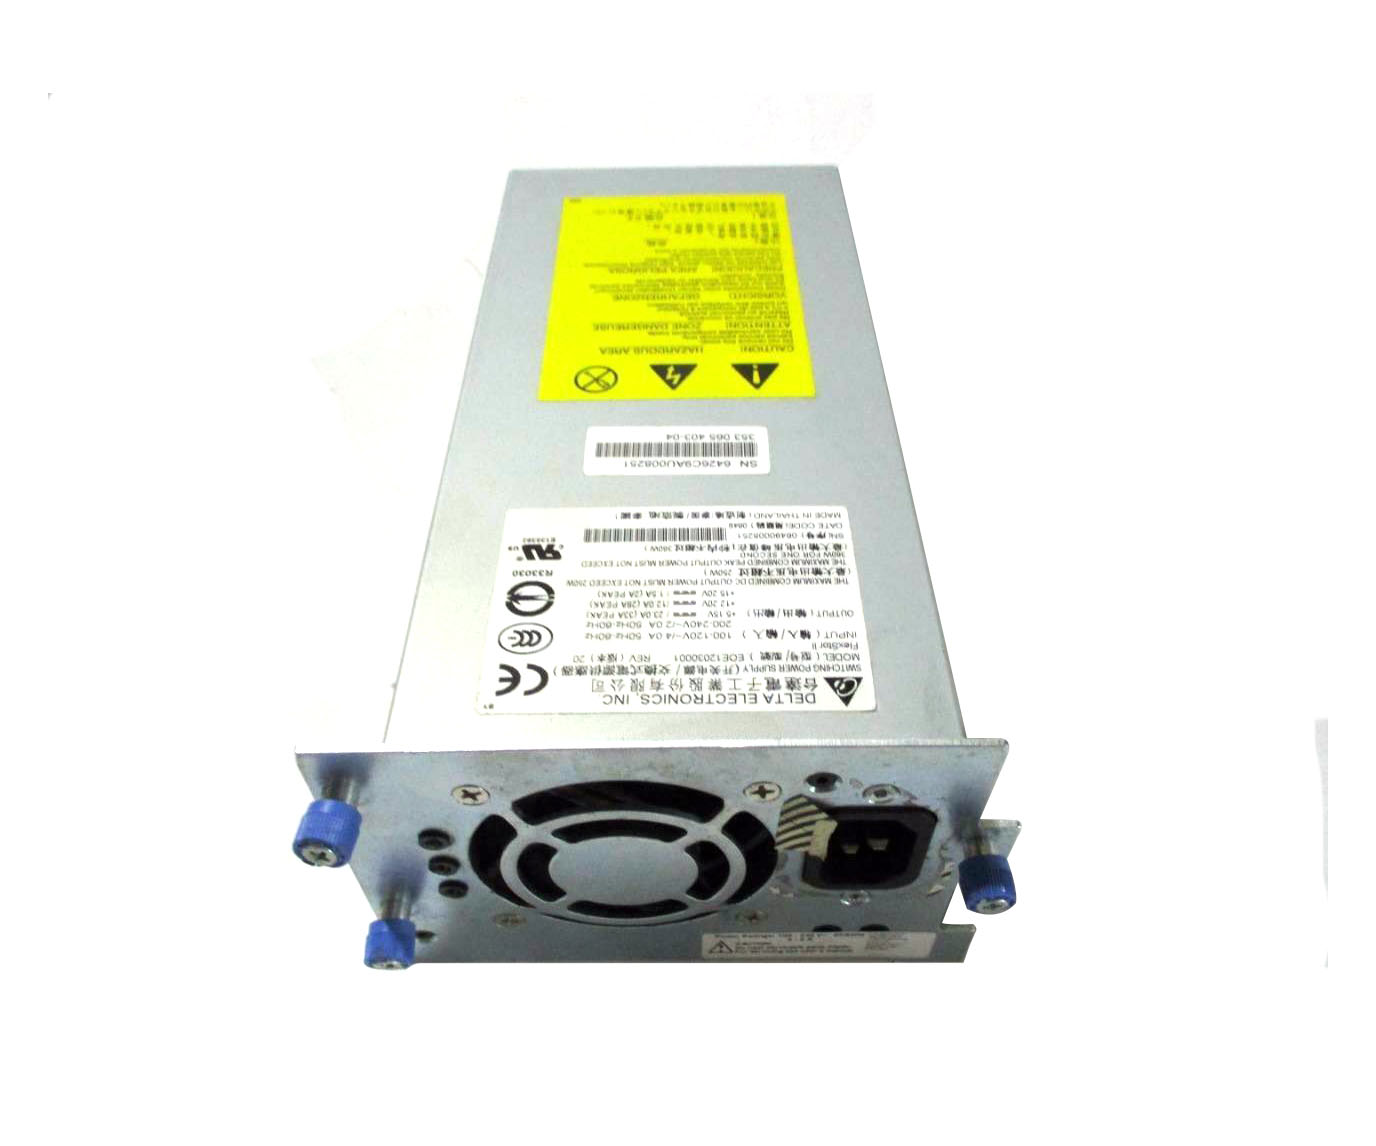 Delta EOE12030001 250-Watts 100-240V AC 2A 50-60Hz Power Supply for Tape Library TL2000 / TL4000 / TS3100 / TS3200 / MSL2024